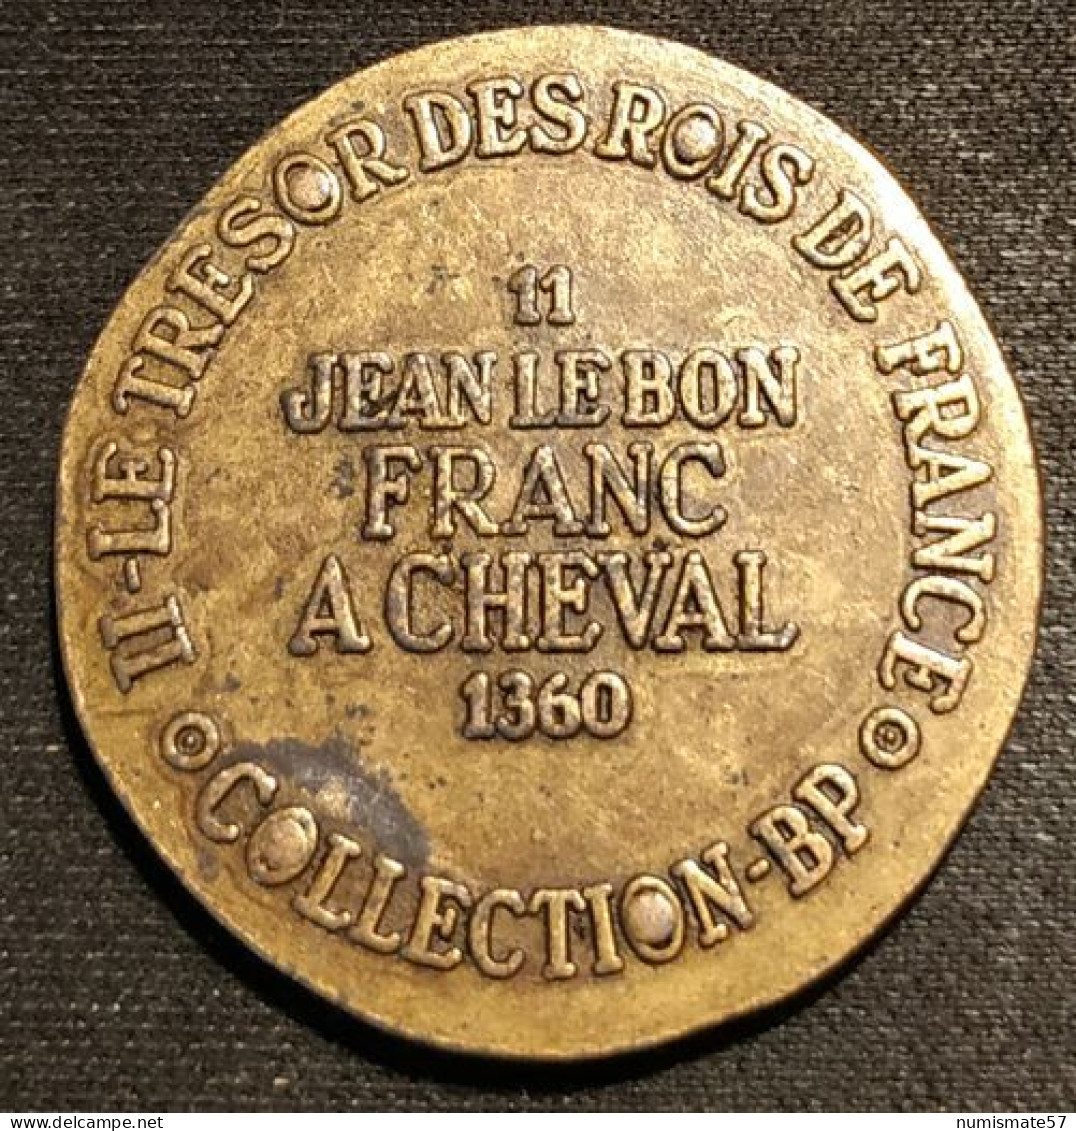 JETON - COLLECTION BP - JEAN LEBON - FRANC A CHEVAL 1360 - Professionals / Firms